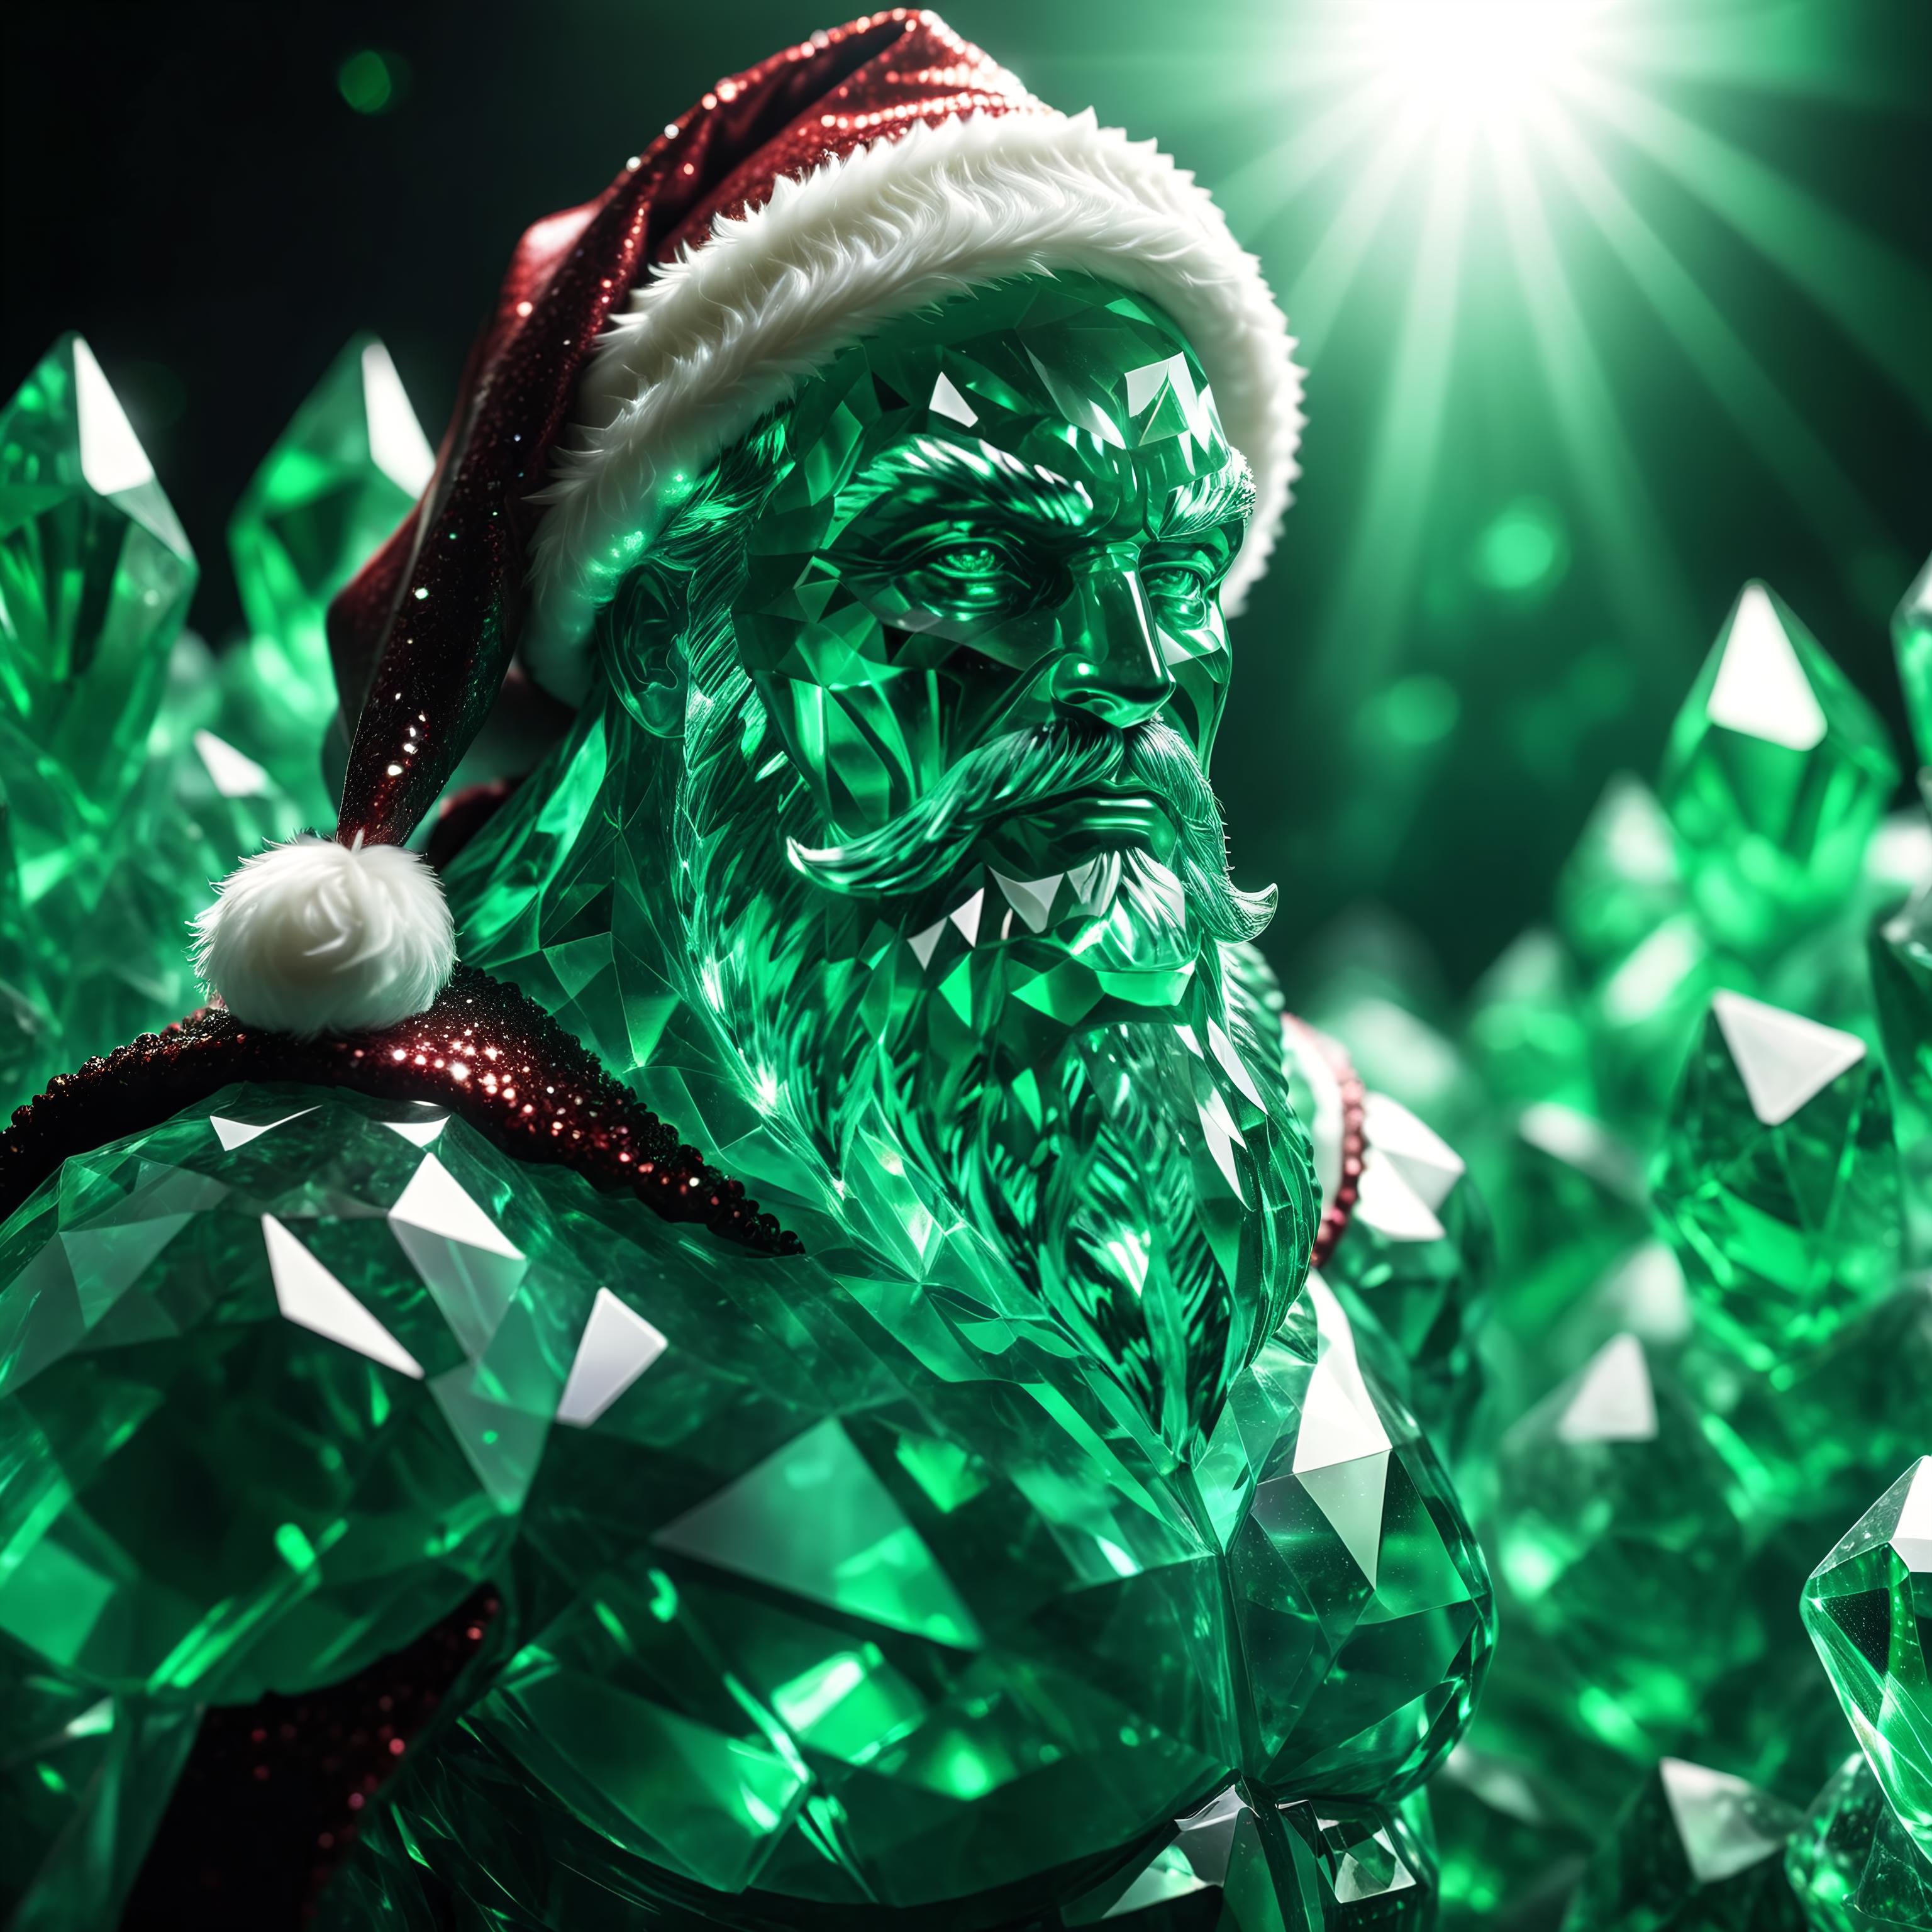 A Santa Claus figure made of green gems